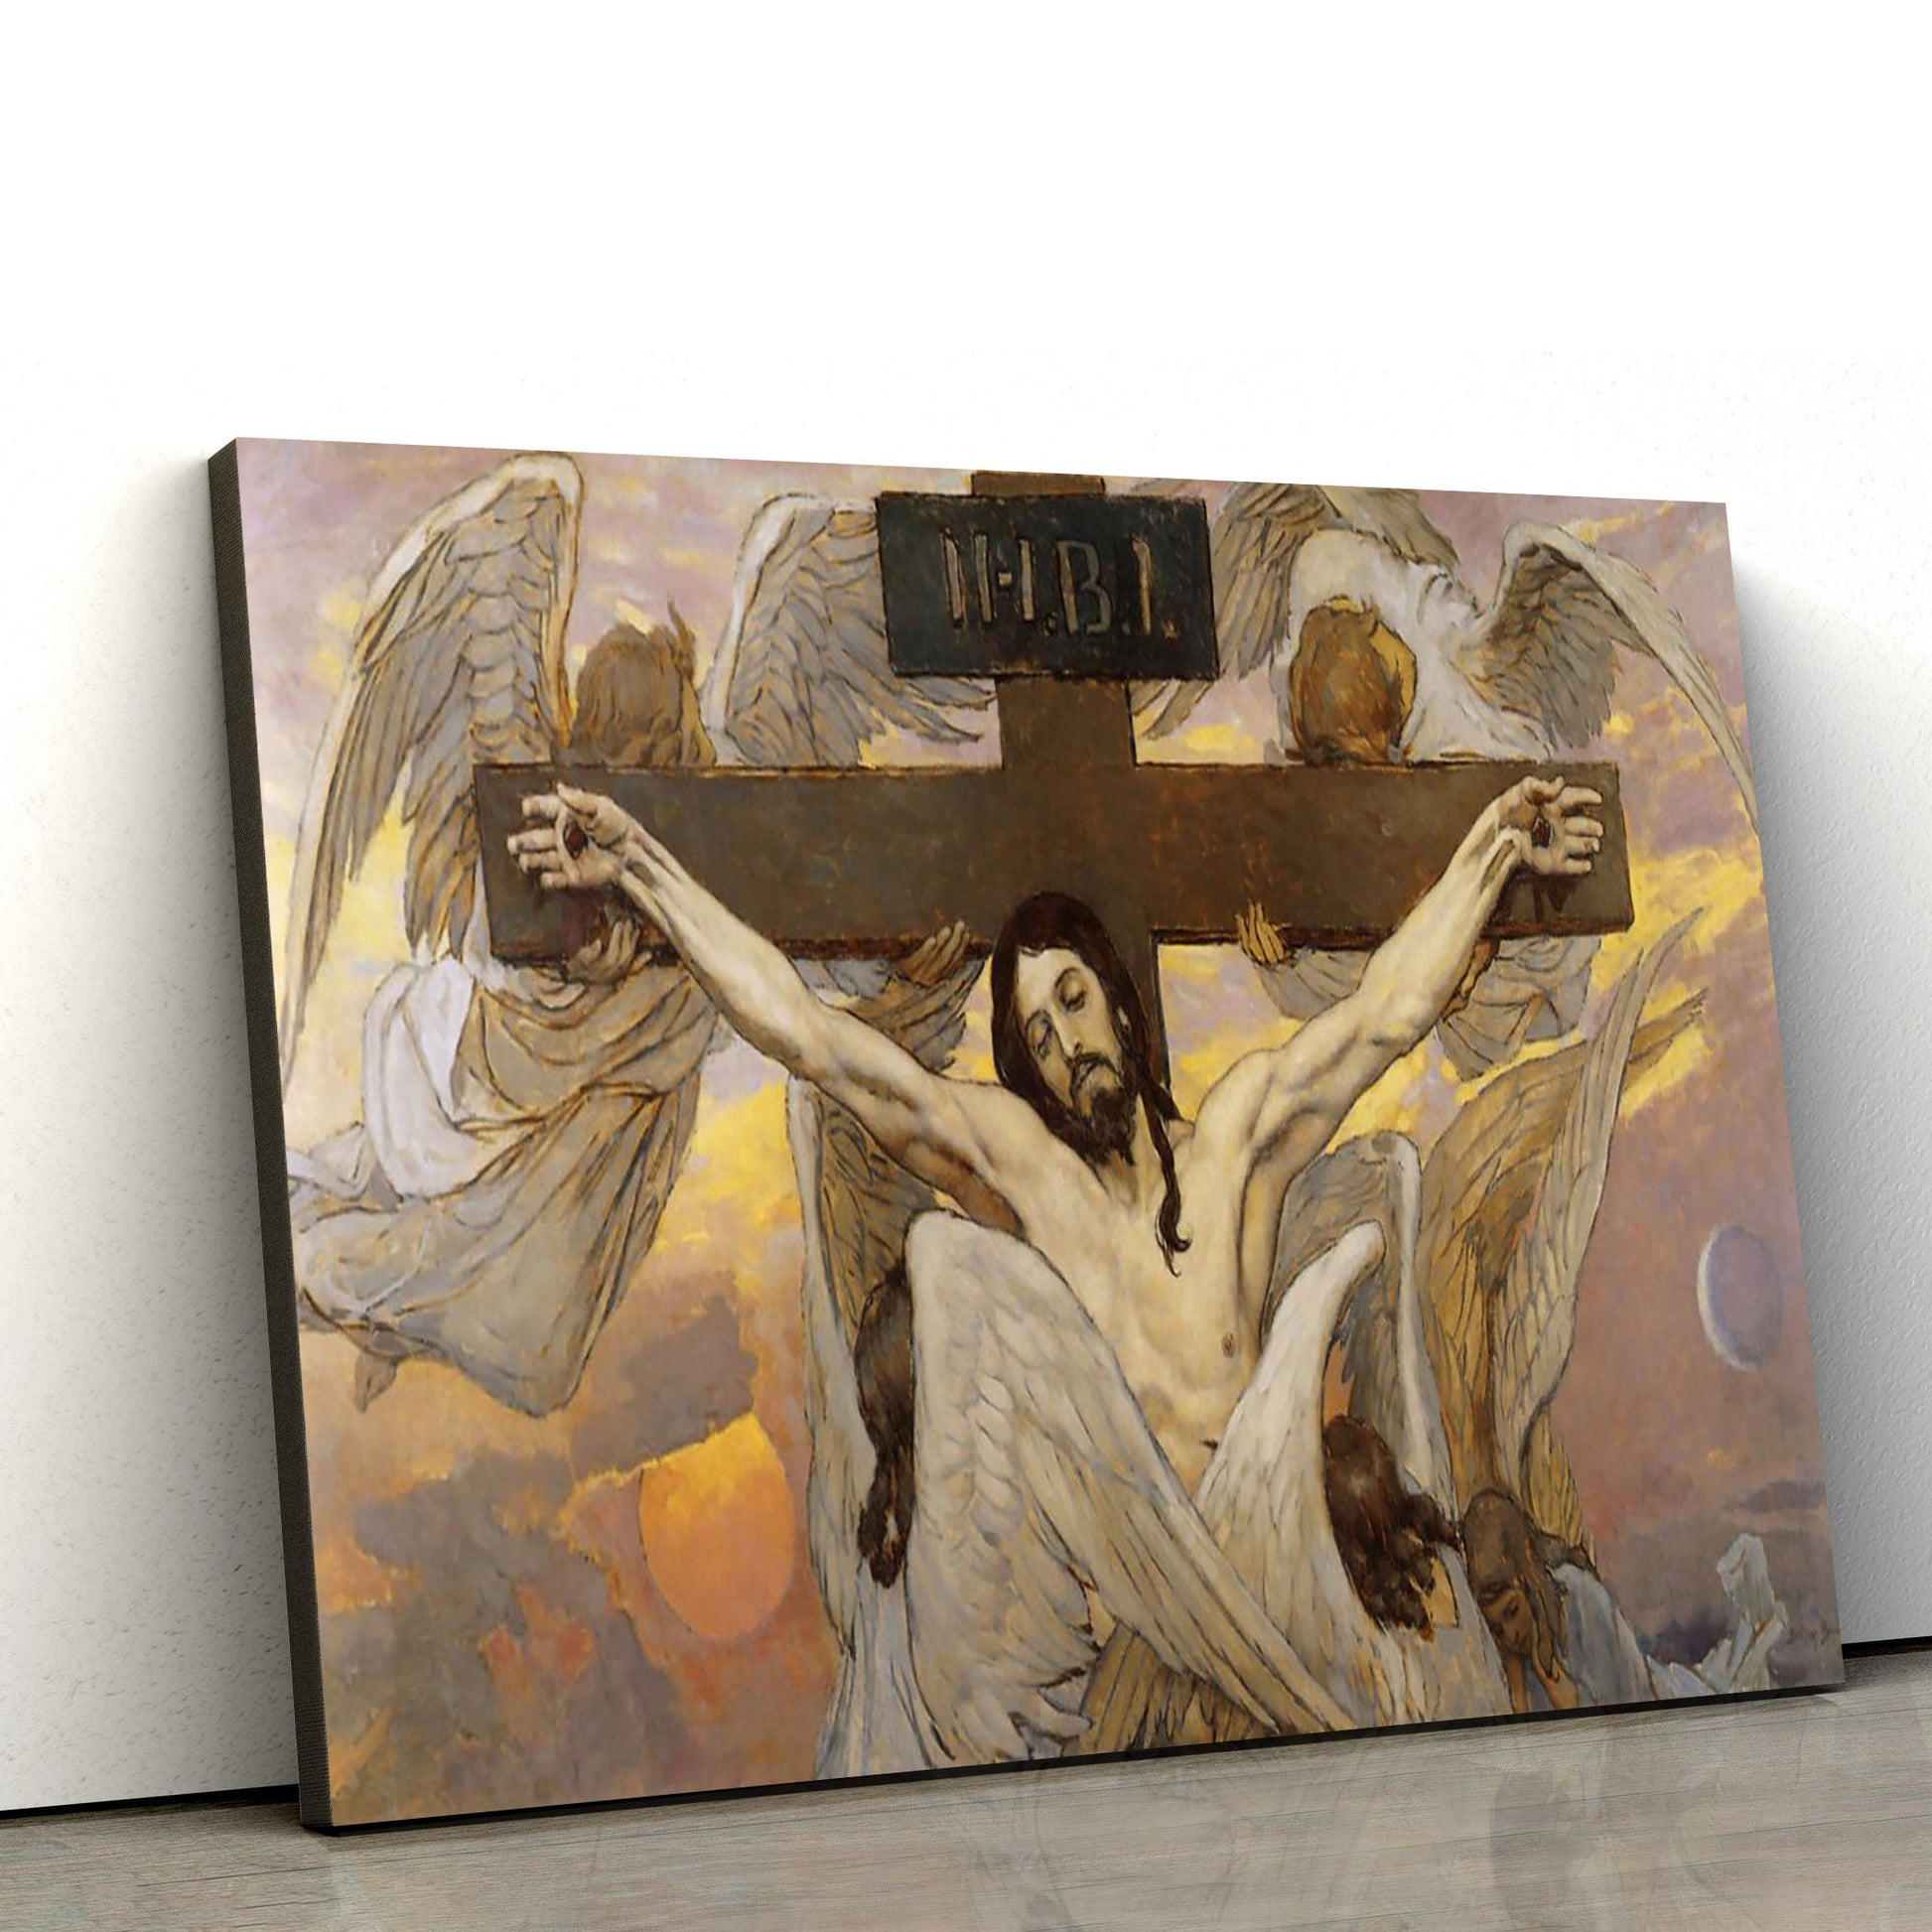 Jesus Is Crucified - Jesus Canvas Wall Art - Christian Wall Art